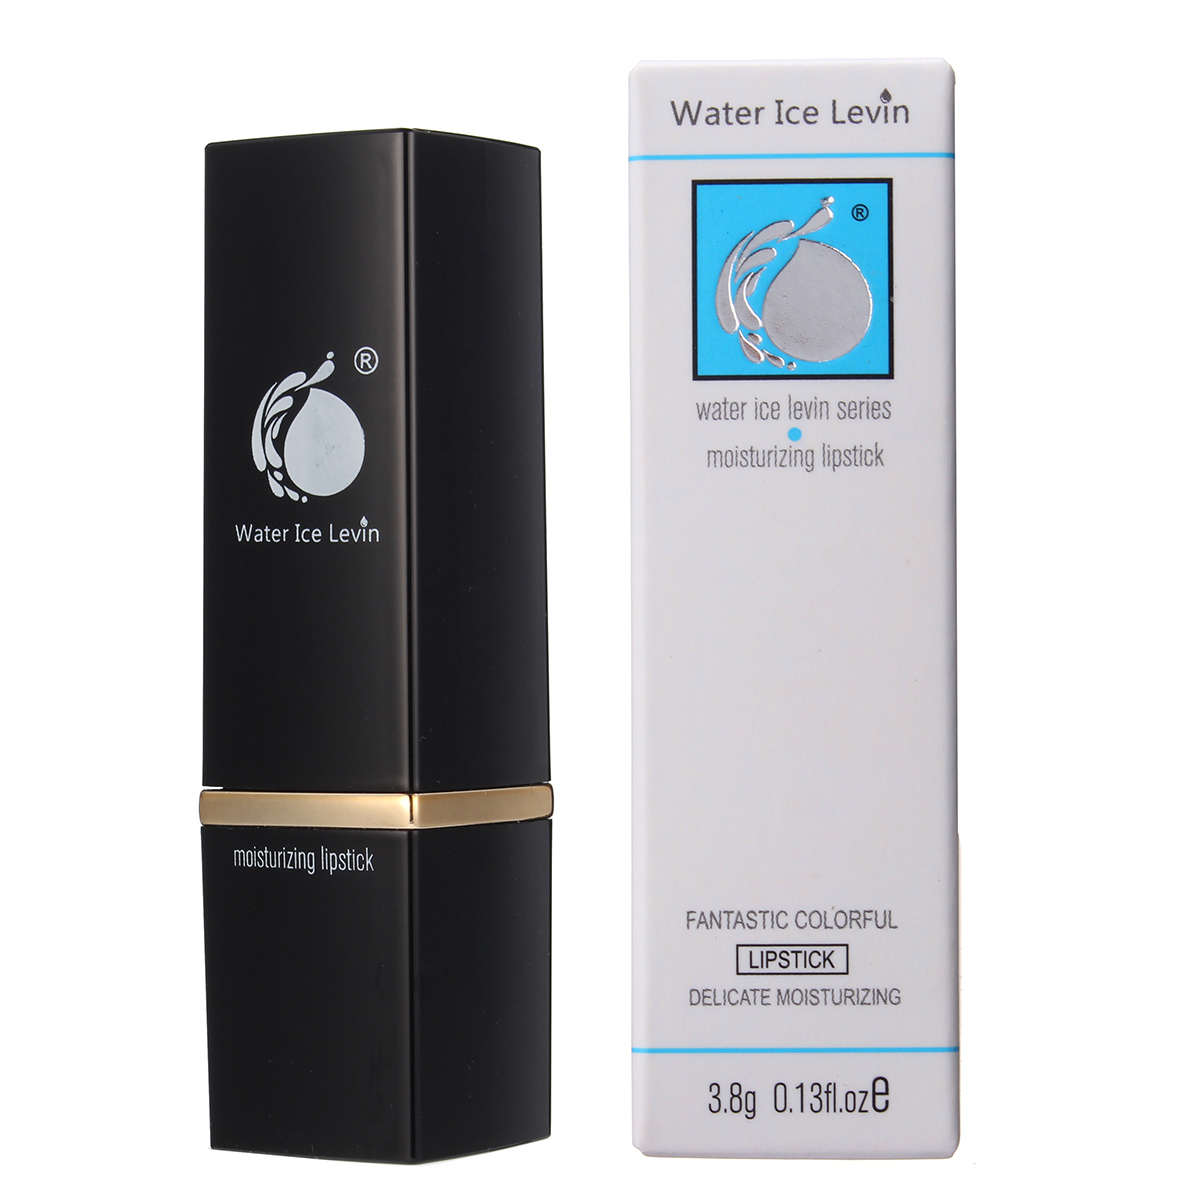 Water Ice Levin Delicate Moisturizing Lipstick Lip Makeup Cosmetic